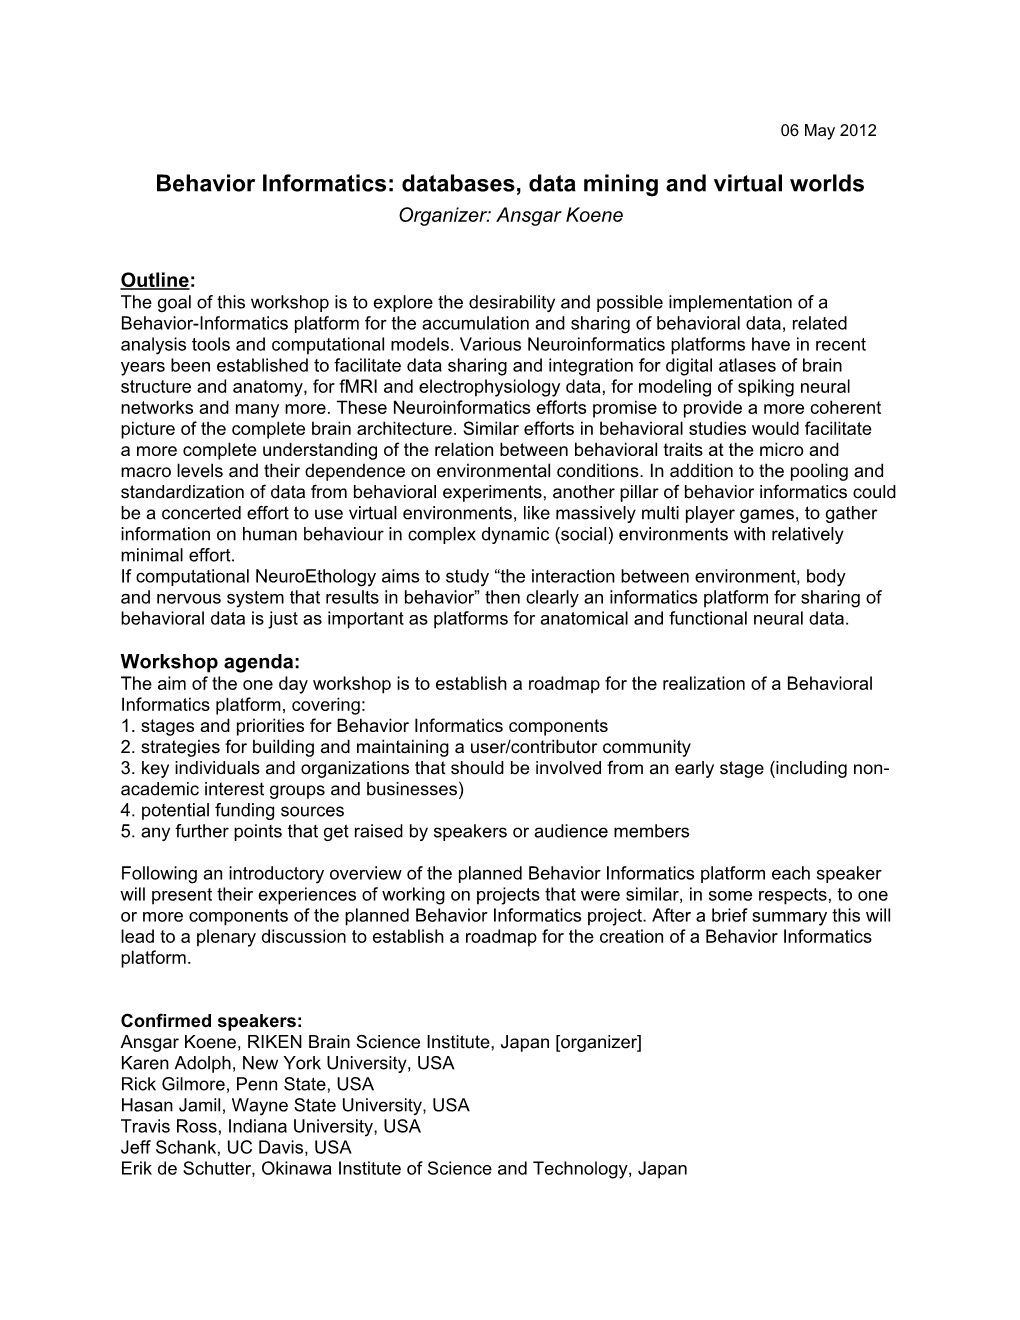 Behavior Informatics: Databases, Data Mining and Virtual Worlds